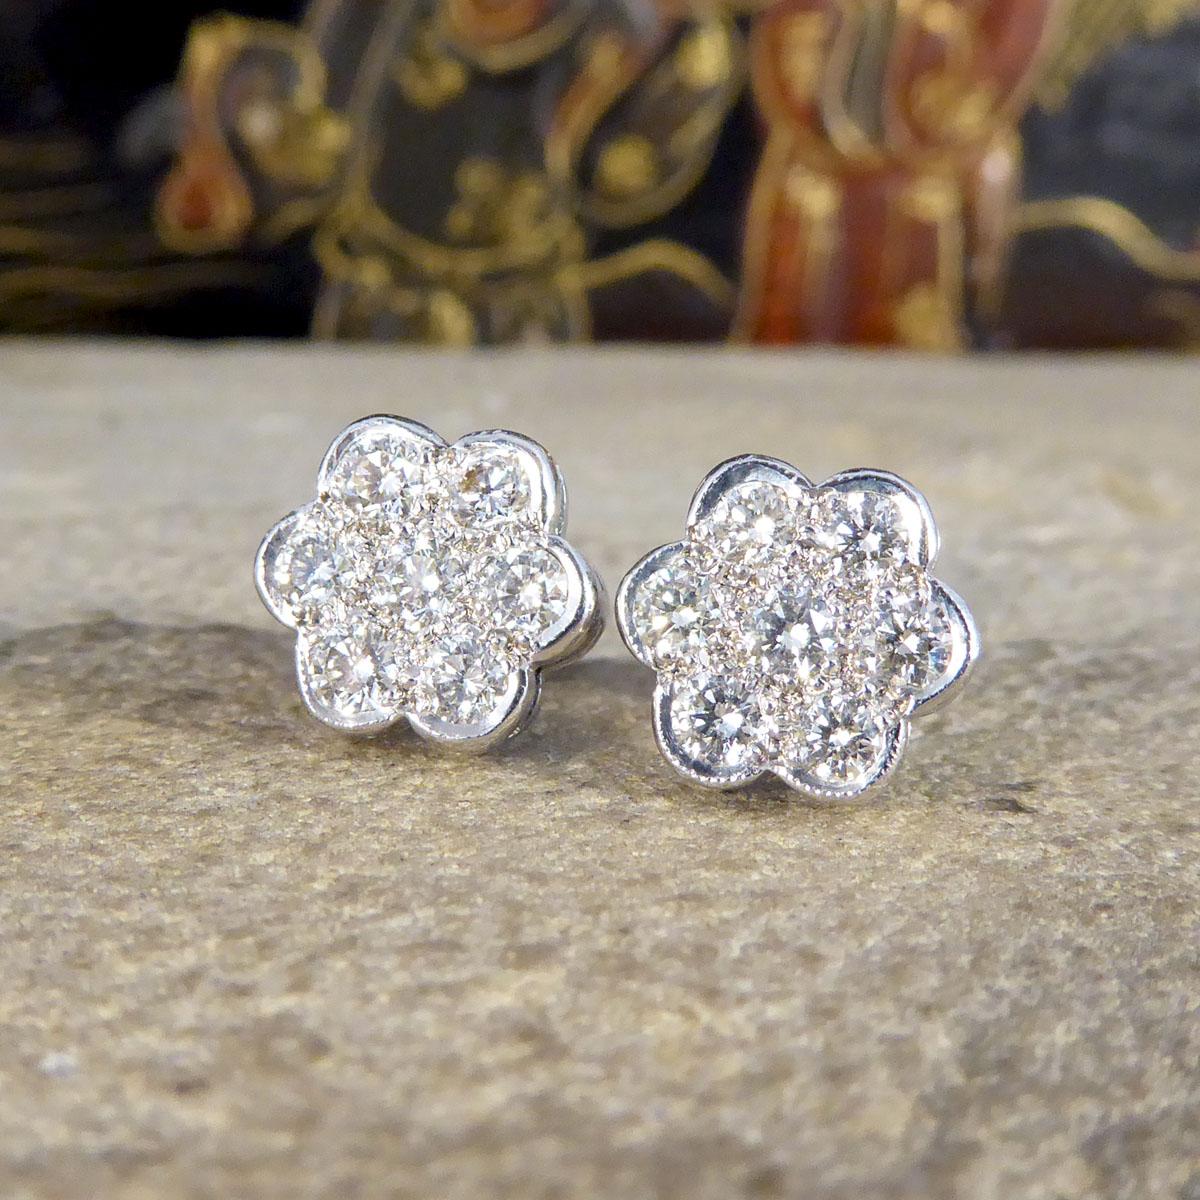 Edwardian Style Daisy Cluster Diamond Earrings in 18 Carat White Gold For Sale 1